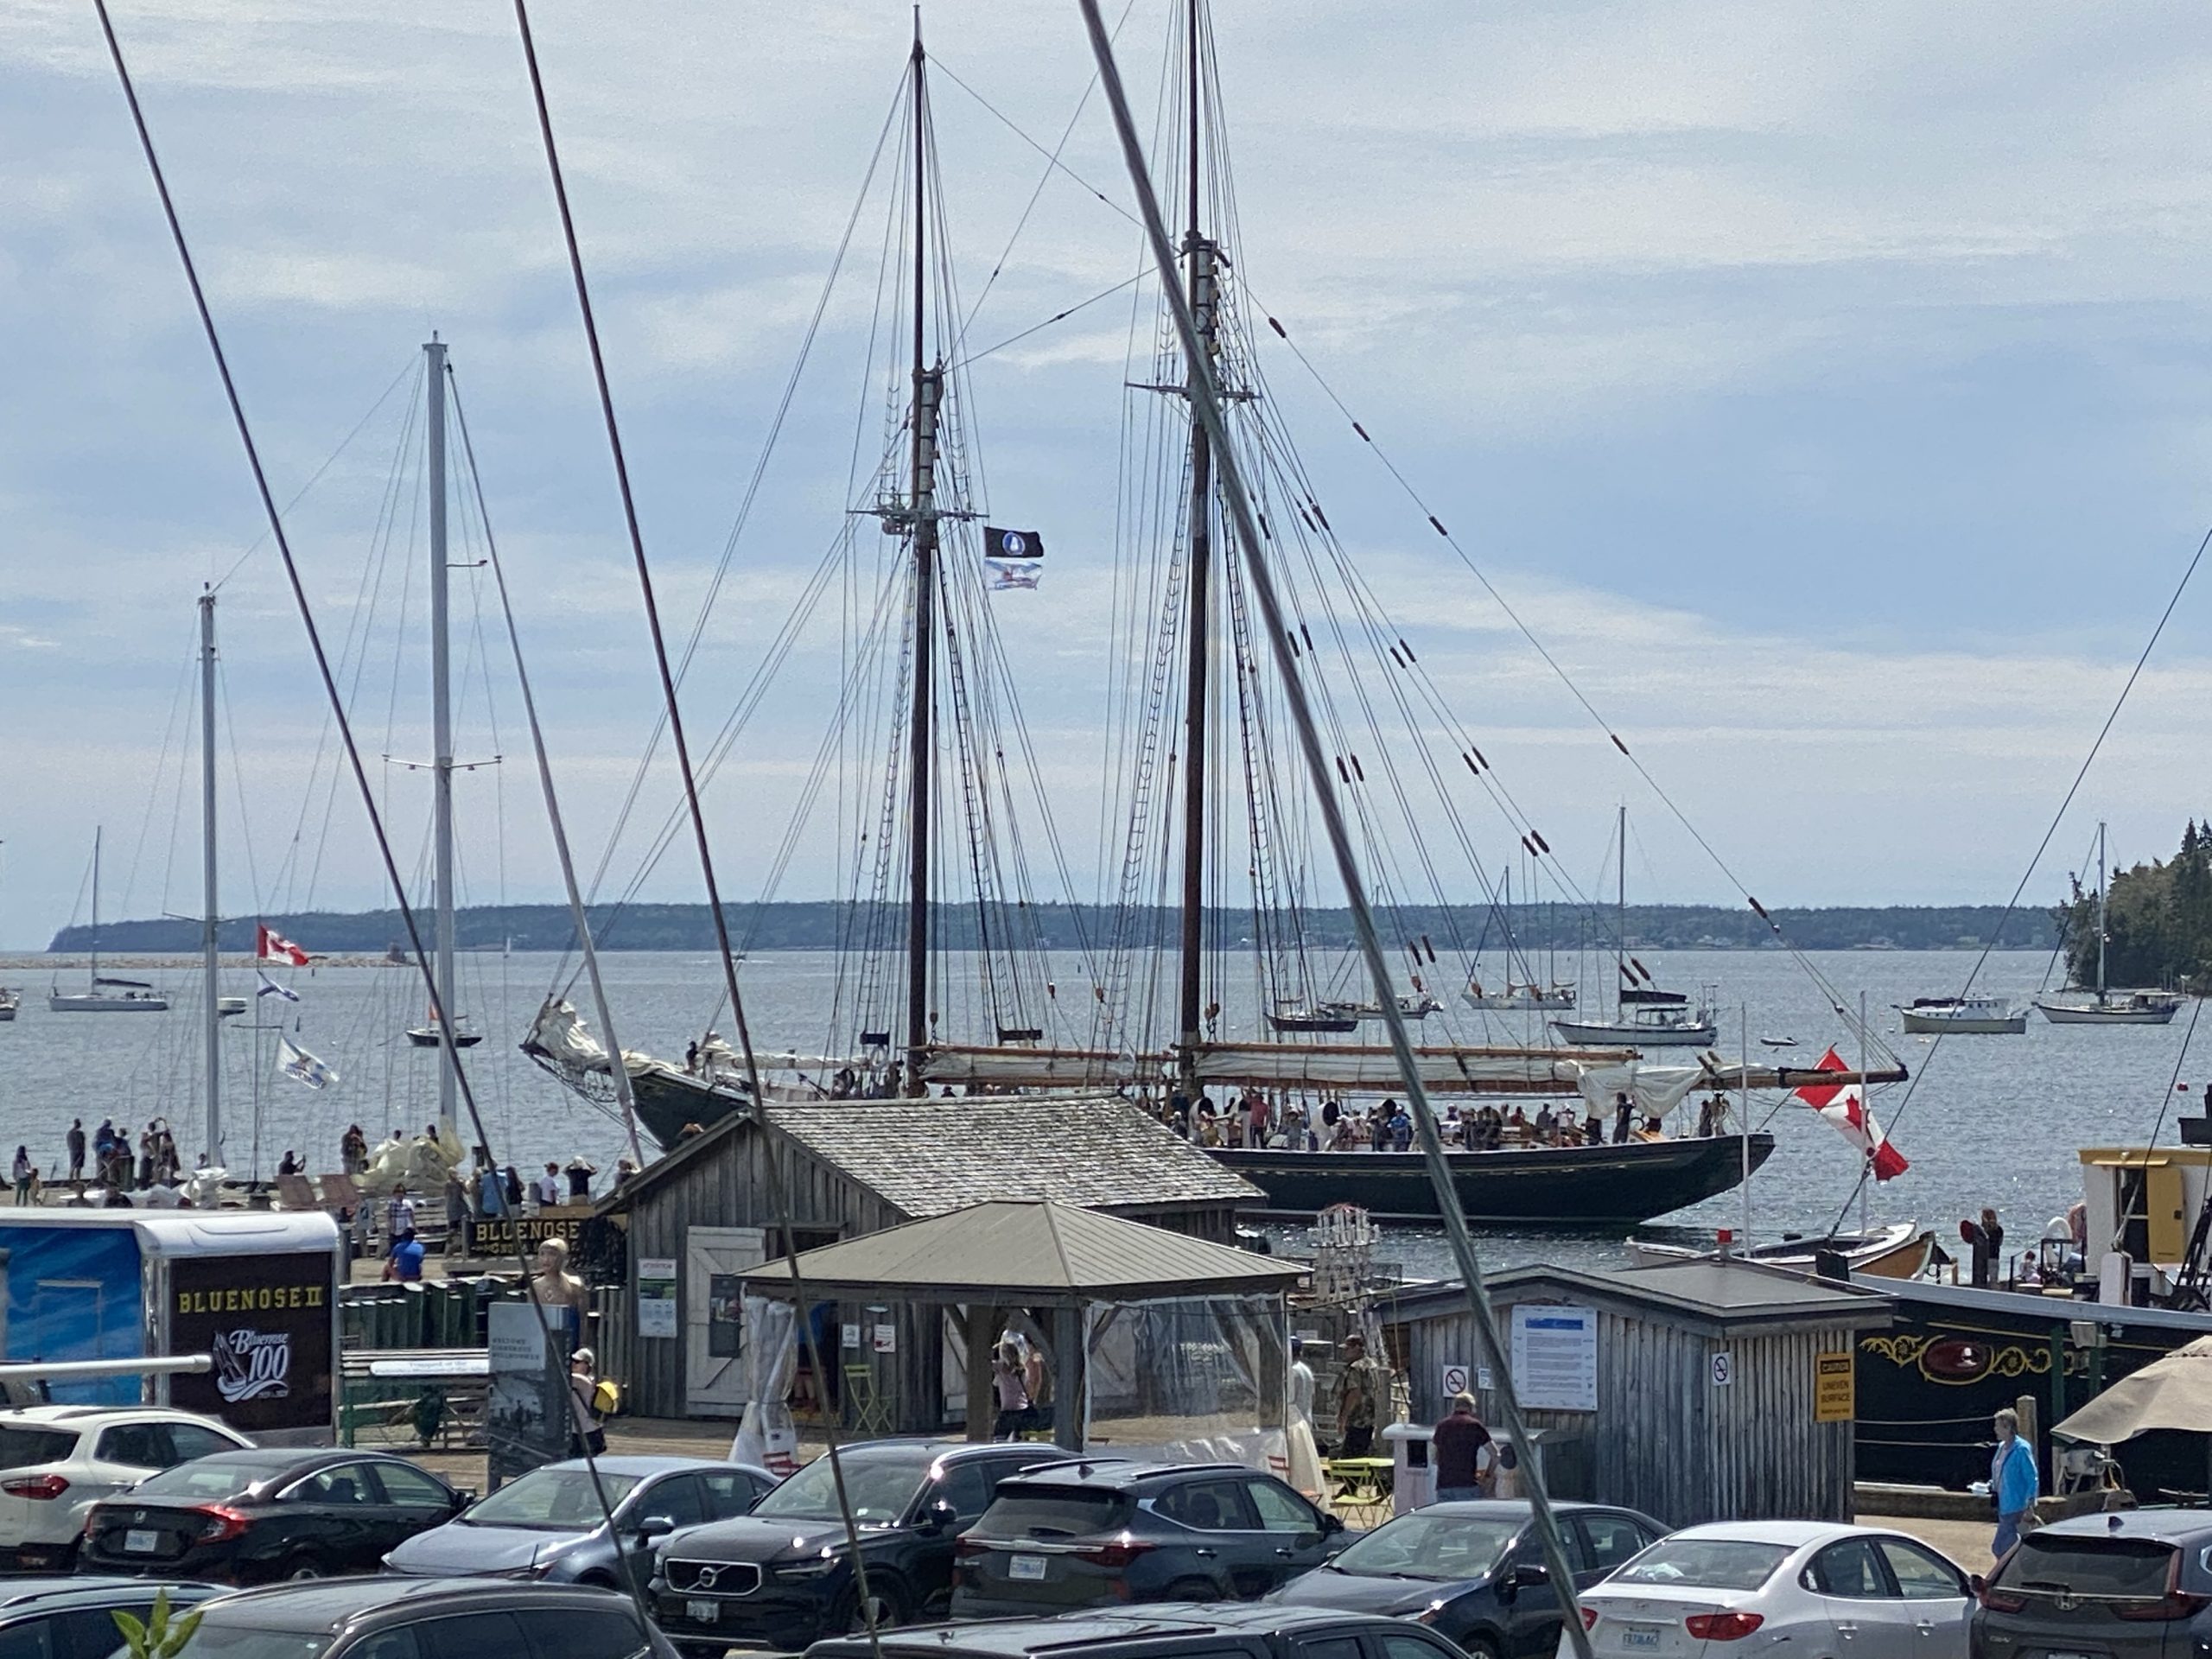 The Bluenose II leaves the dock in Lunenberg, Nova Scotia.